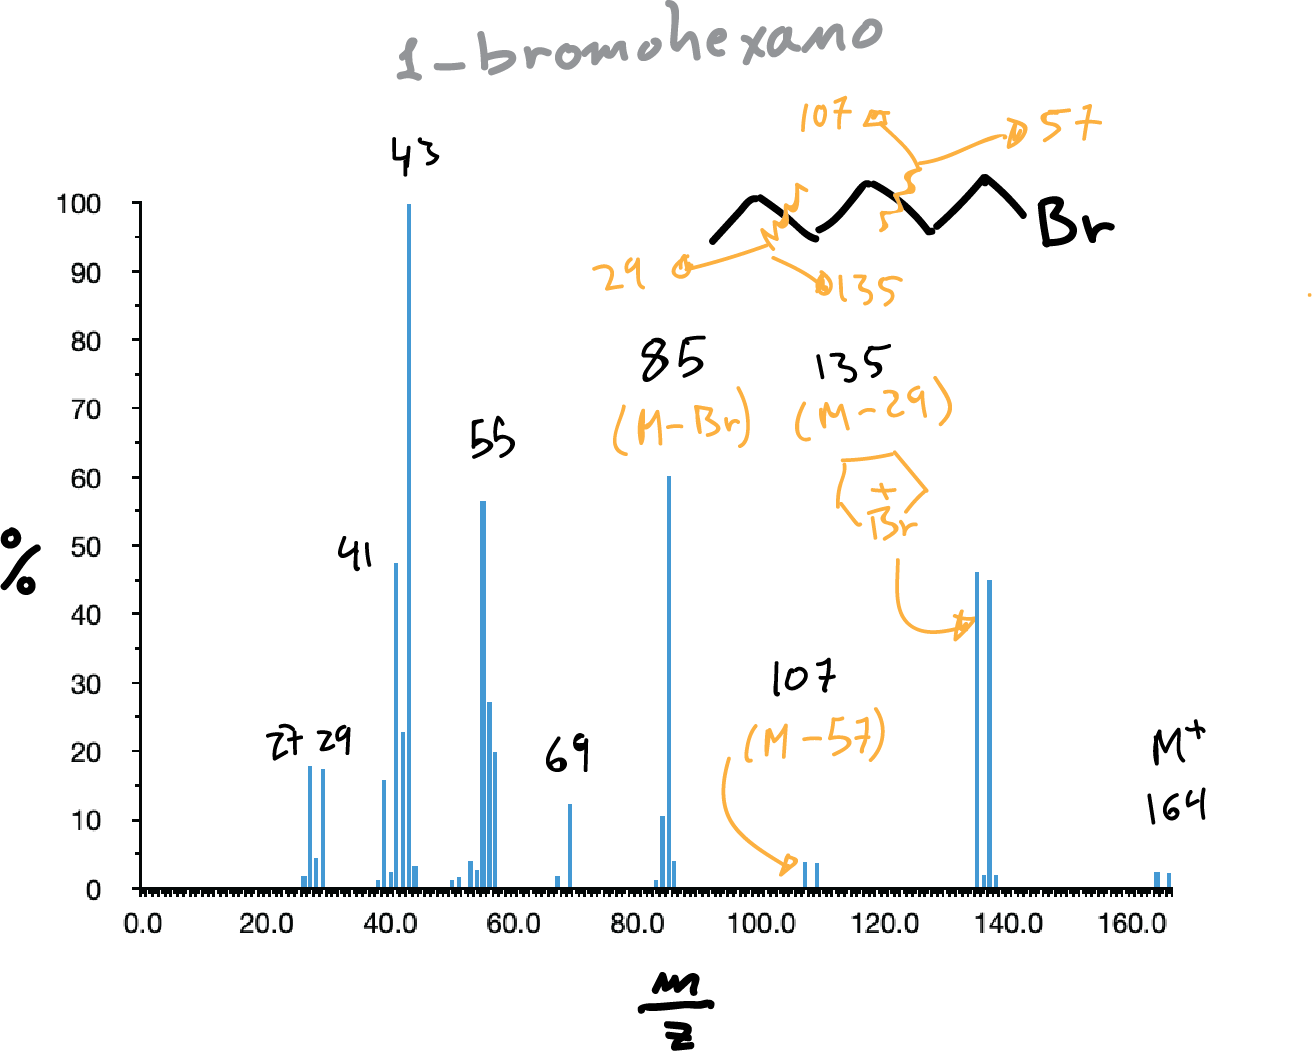 MS mass spectrum of 1-bromohexane